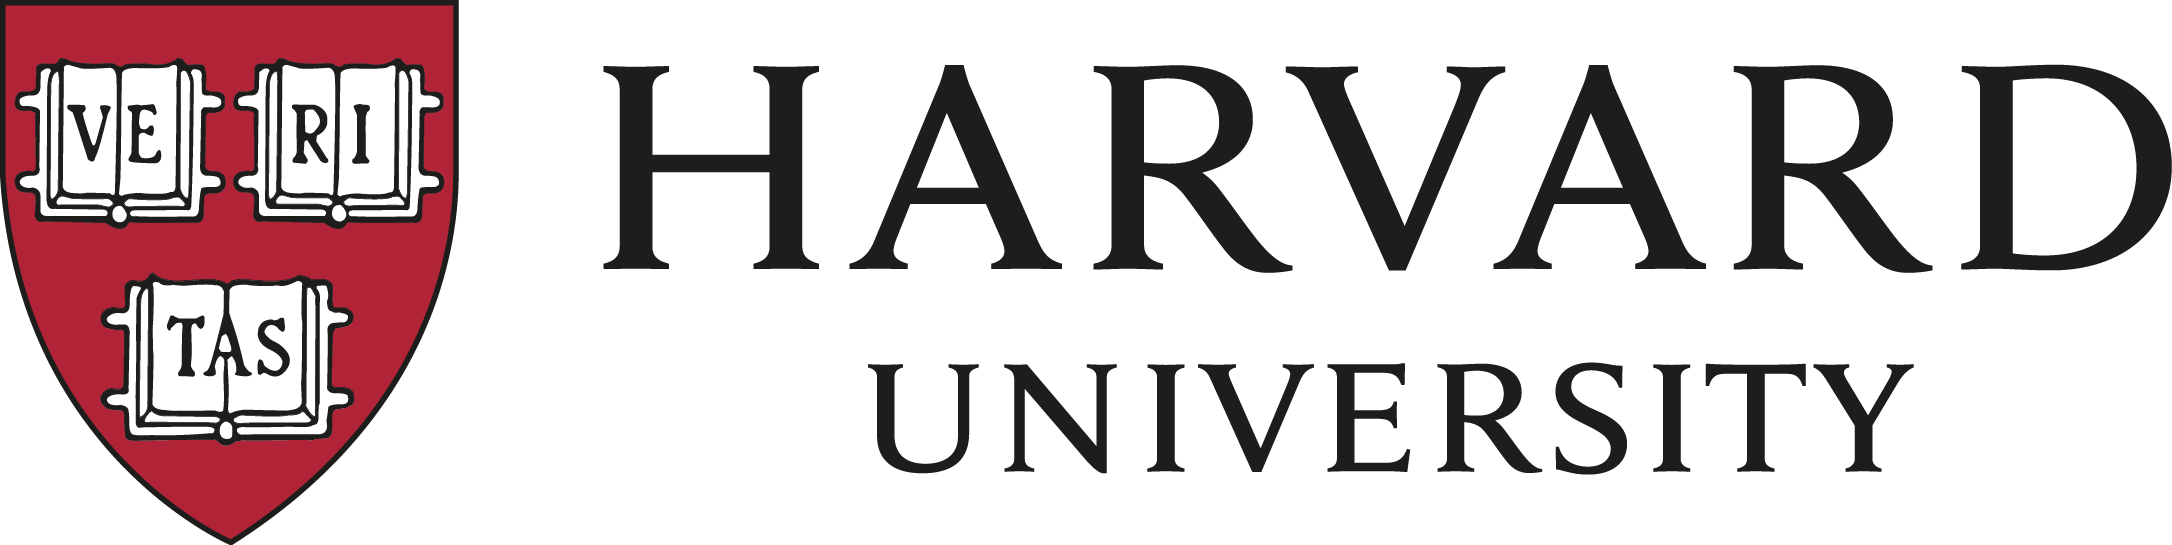 Harvard University Logo - Harvard University